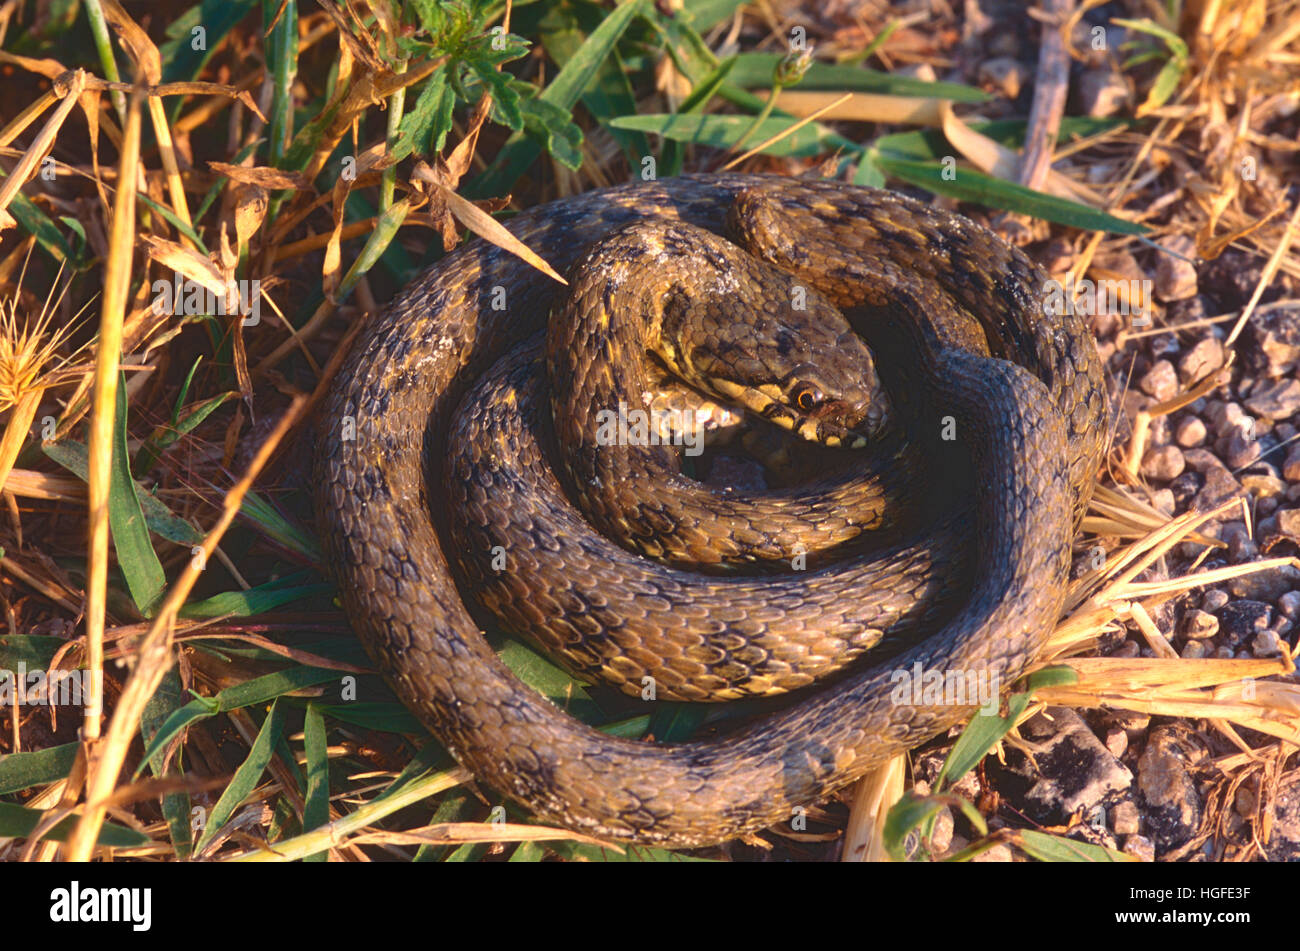 Viperine serpiente de agua, Natrix maura, Foto de stock